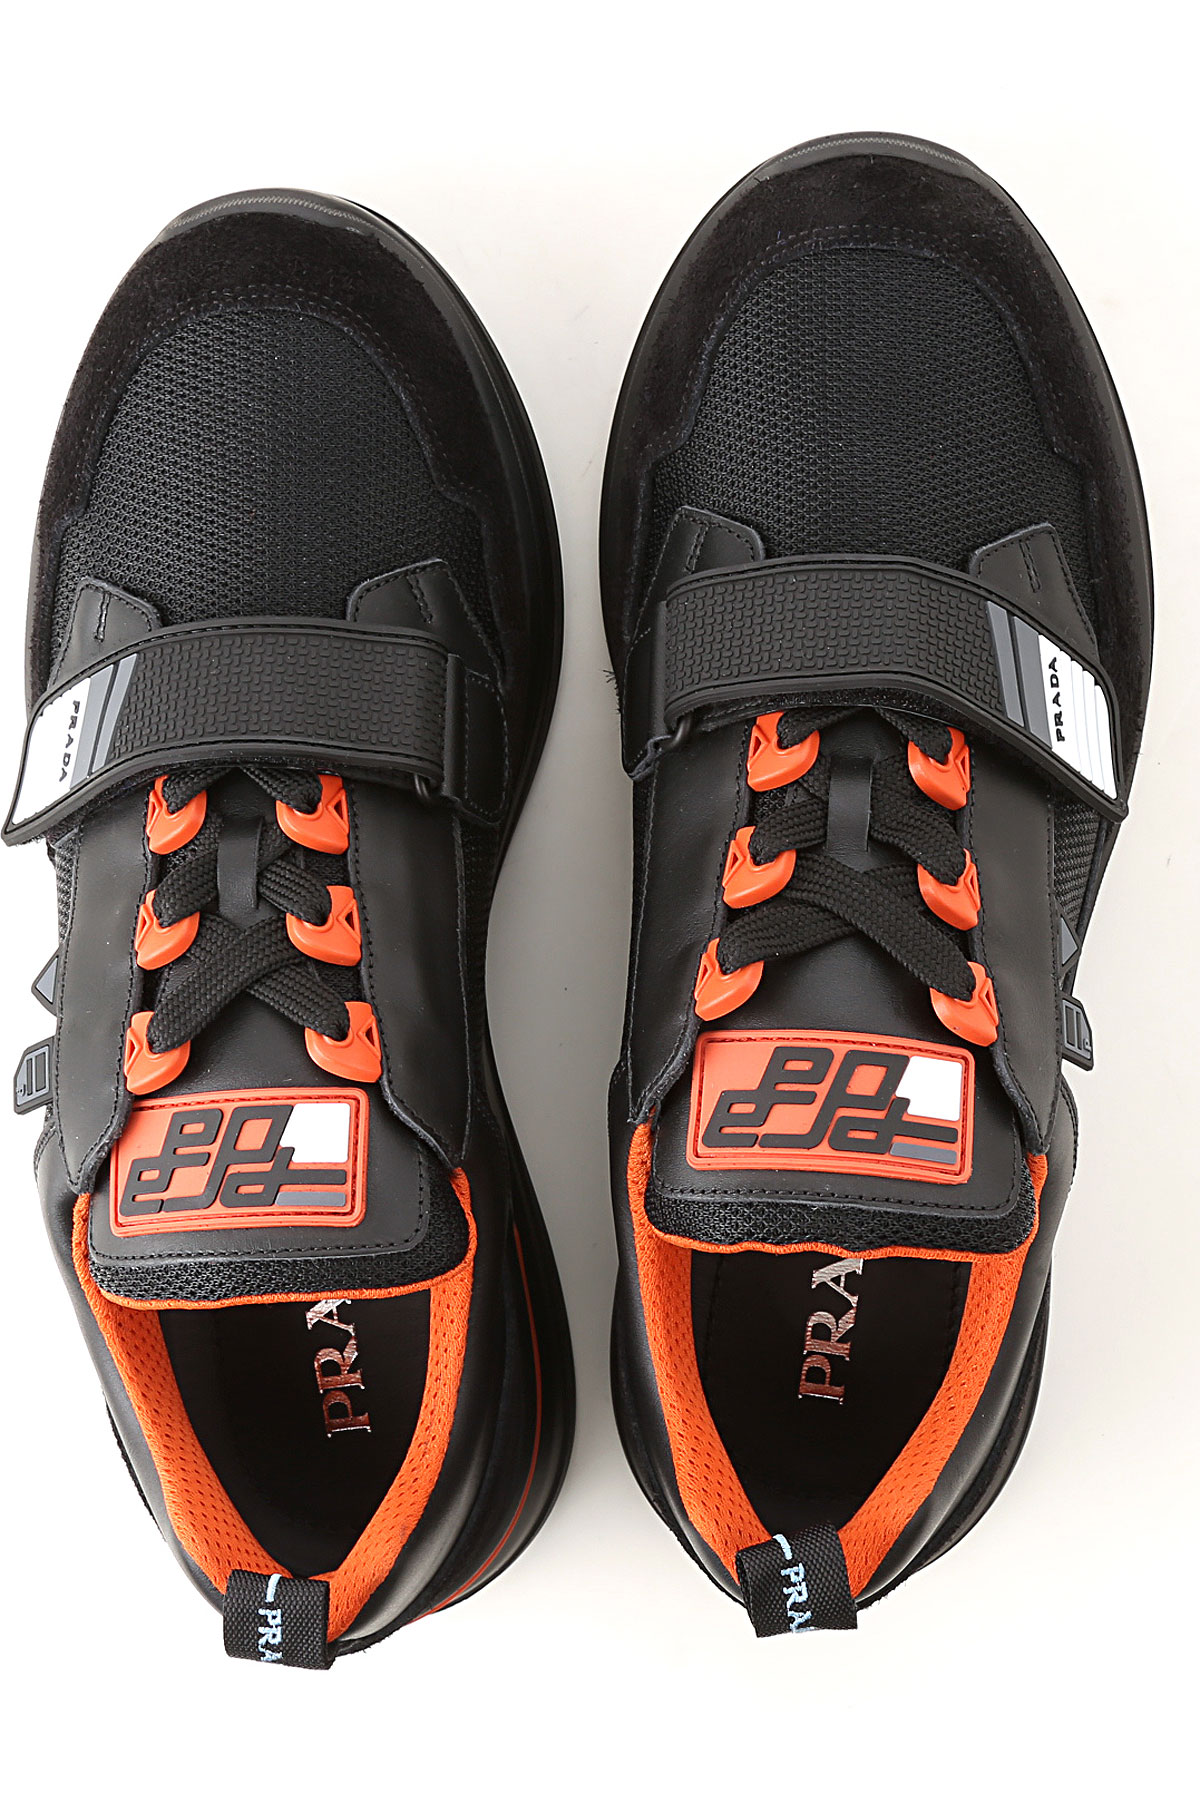 prada shoes orange